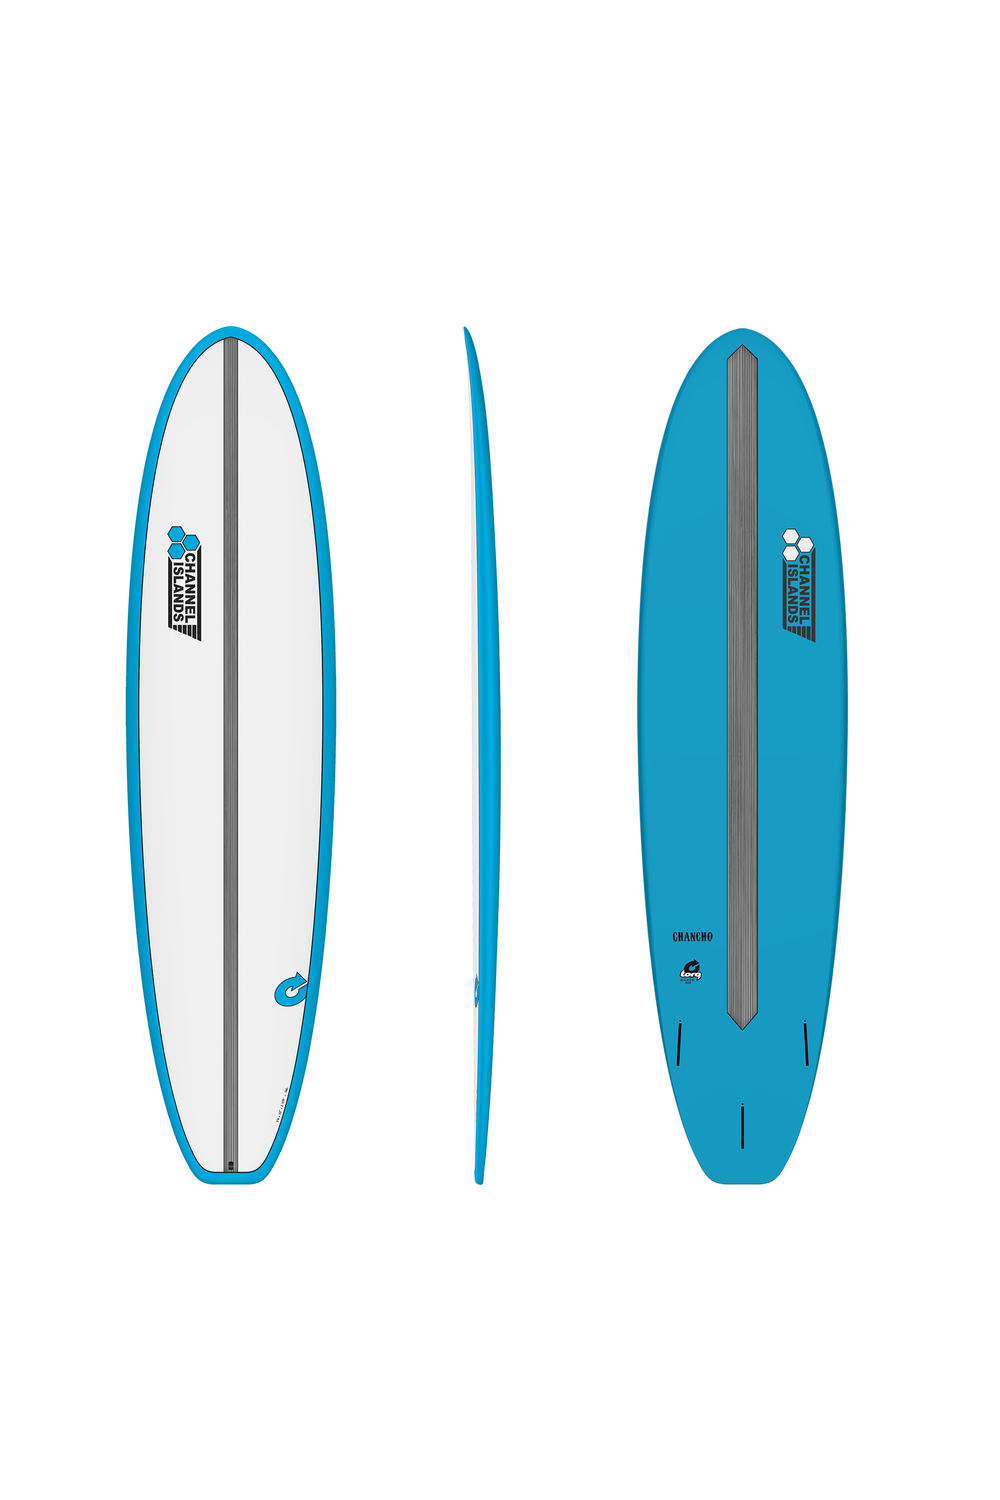 Torq Chancho X-Lite Channel Islands Blue Surfboard